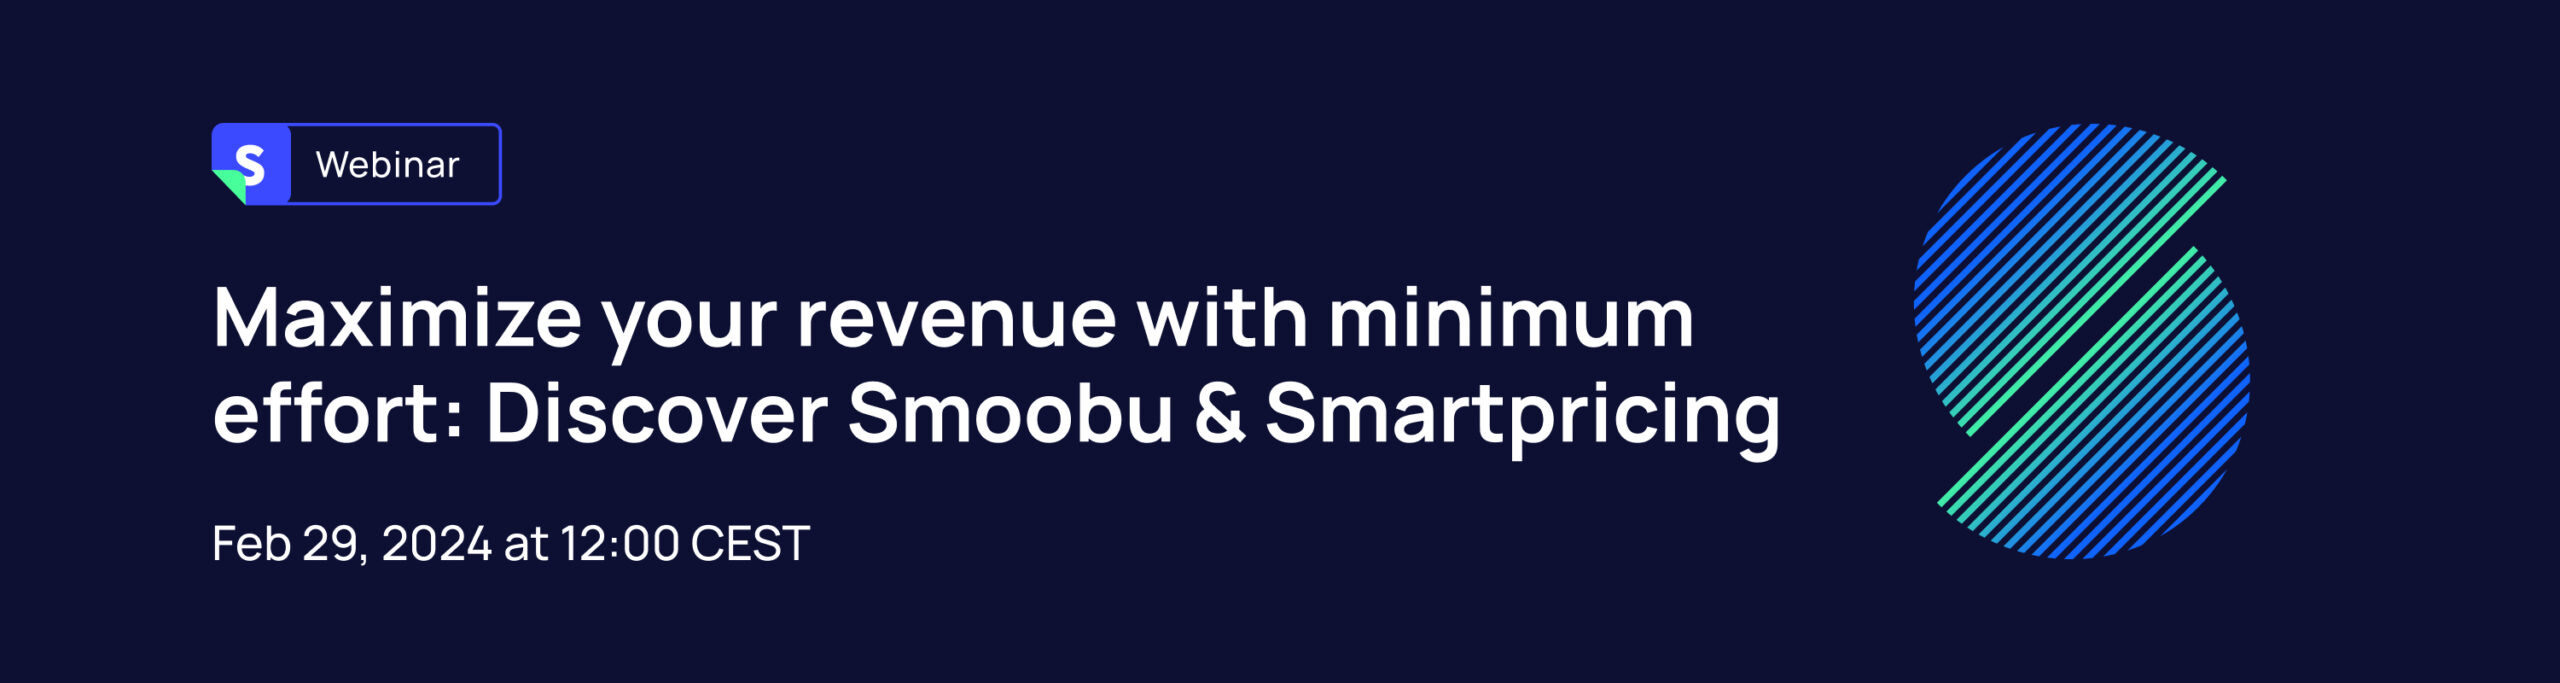 ᐅ Maximize your revenue with minimum effort: Discover Smoobu & Smartpricing